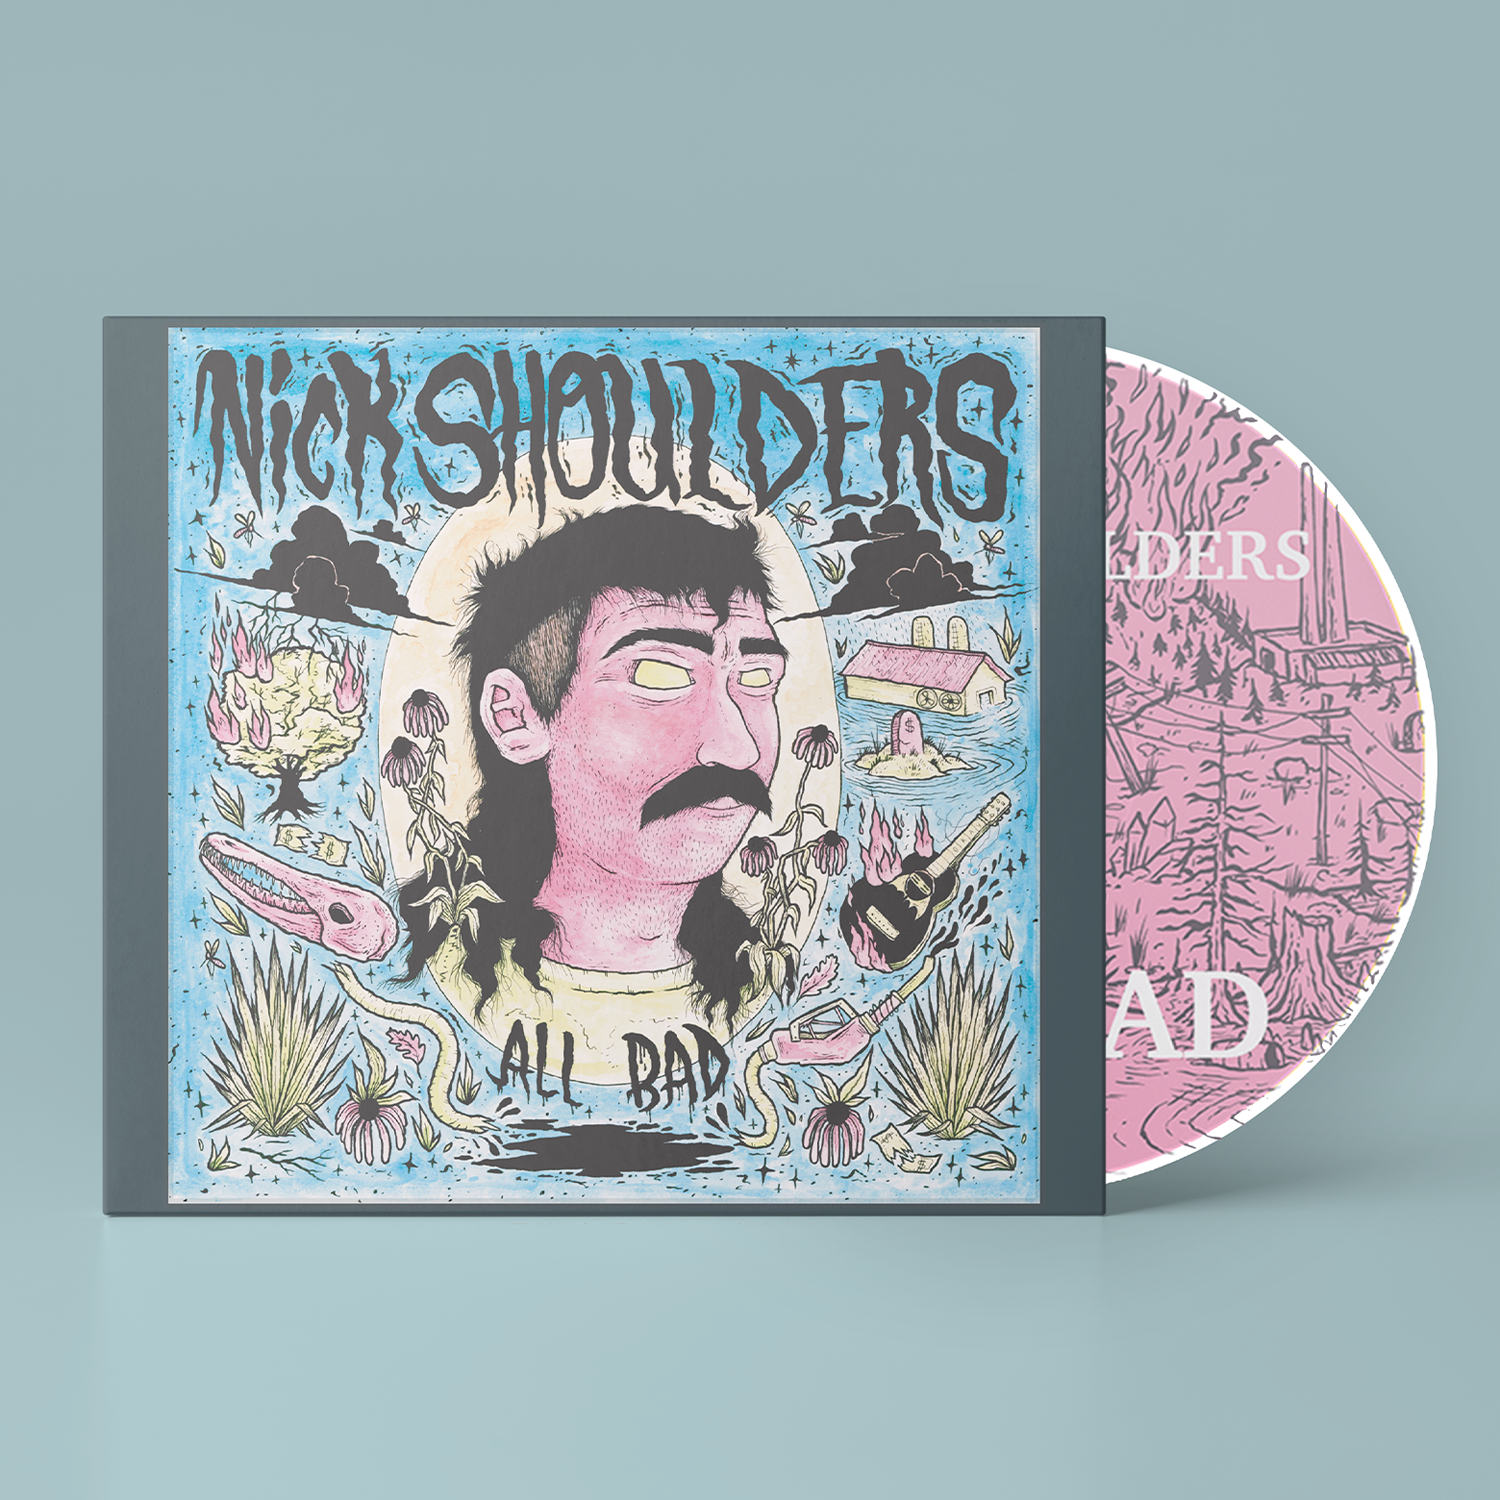 Nick Shoulders - "All Bad" CD